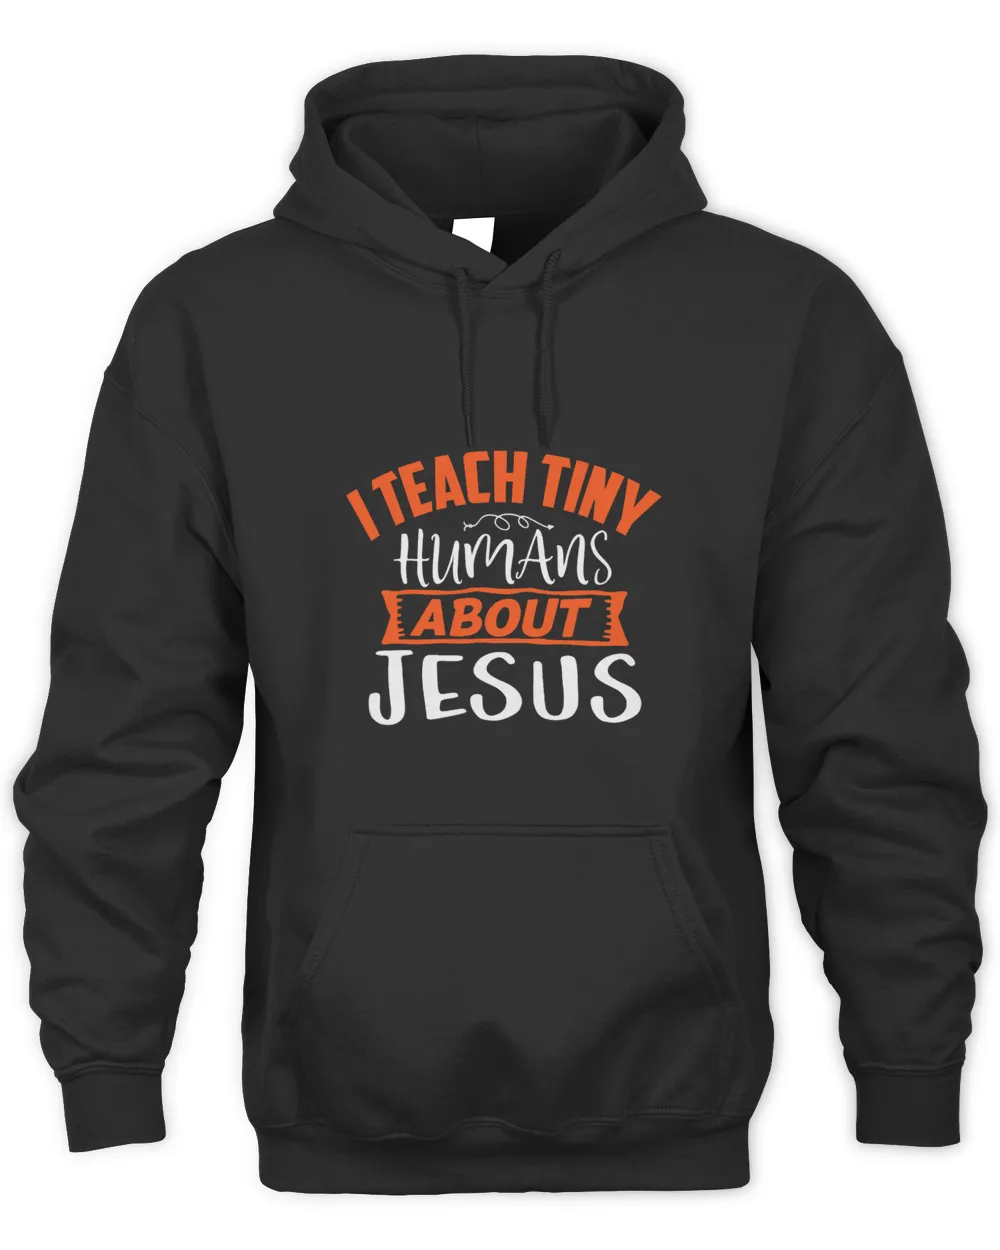 I Teach Tiny Humans About Jesus Sunday School Teacher